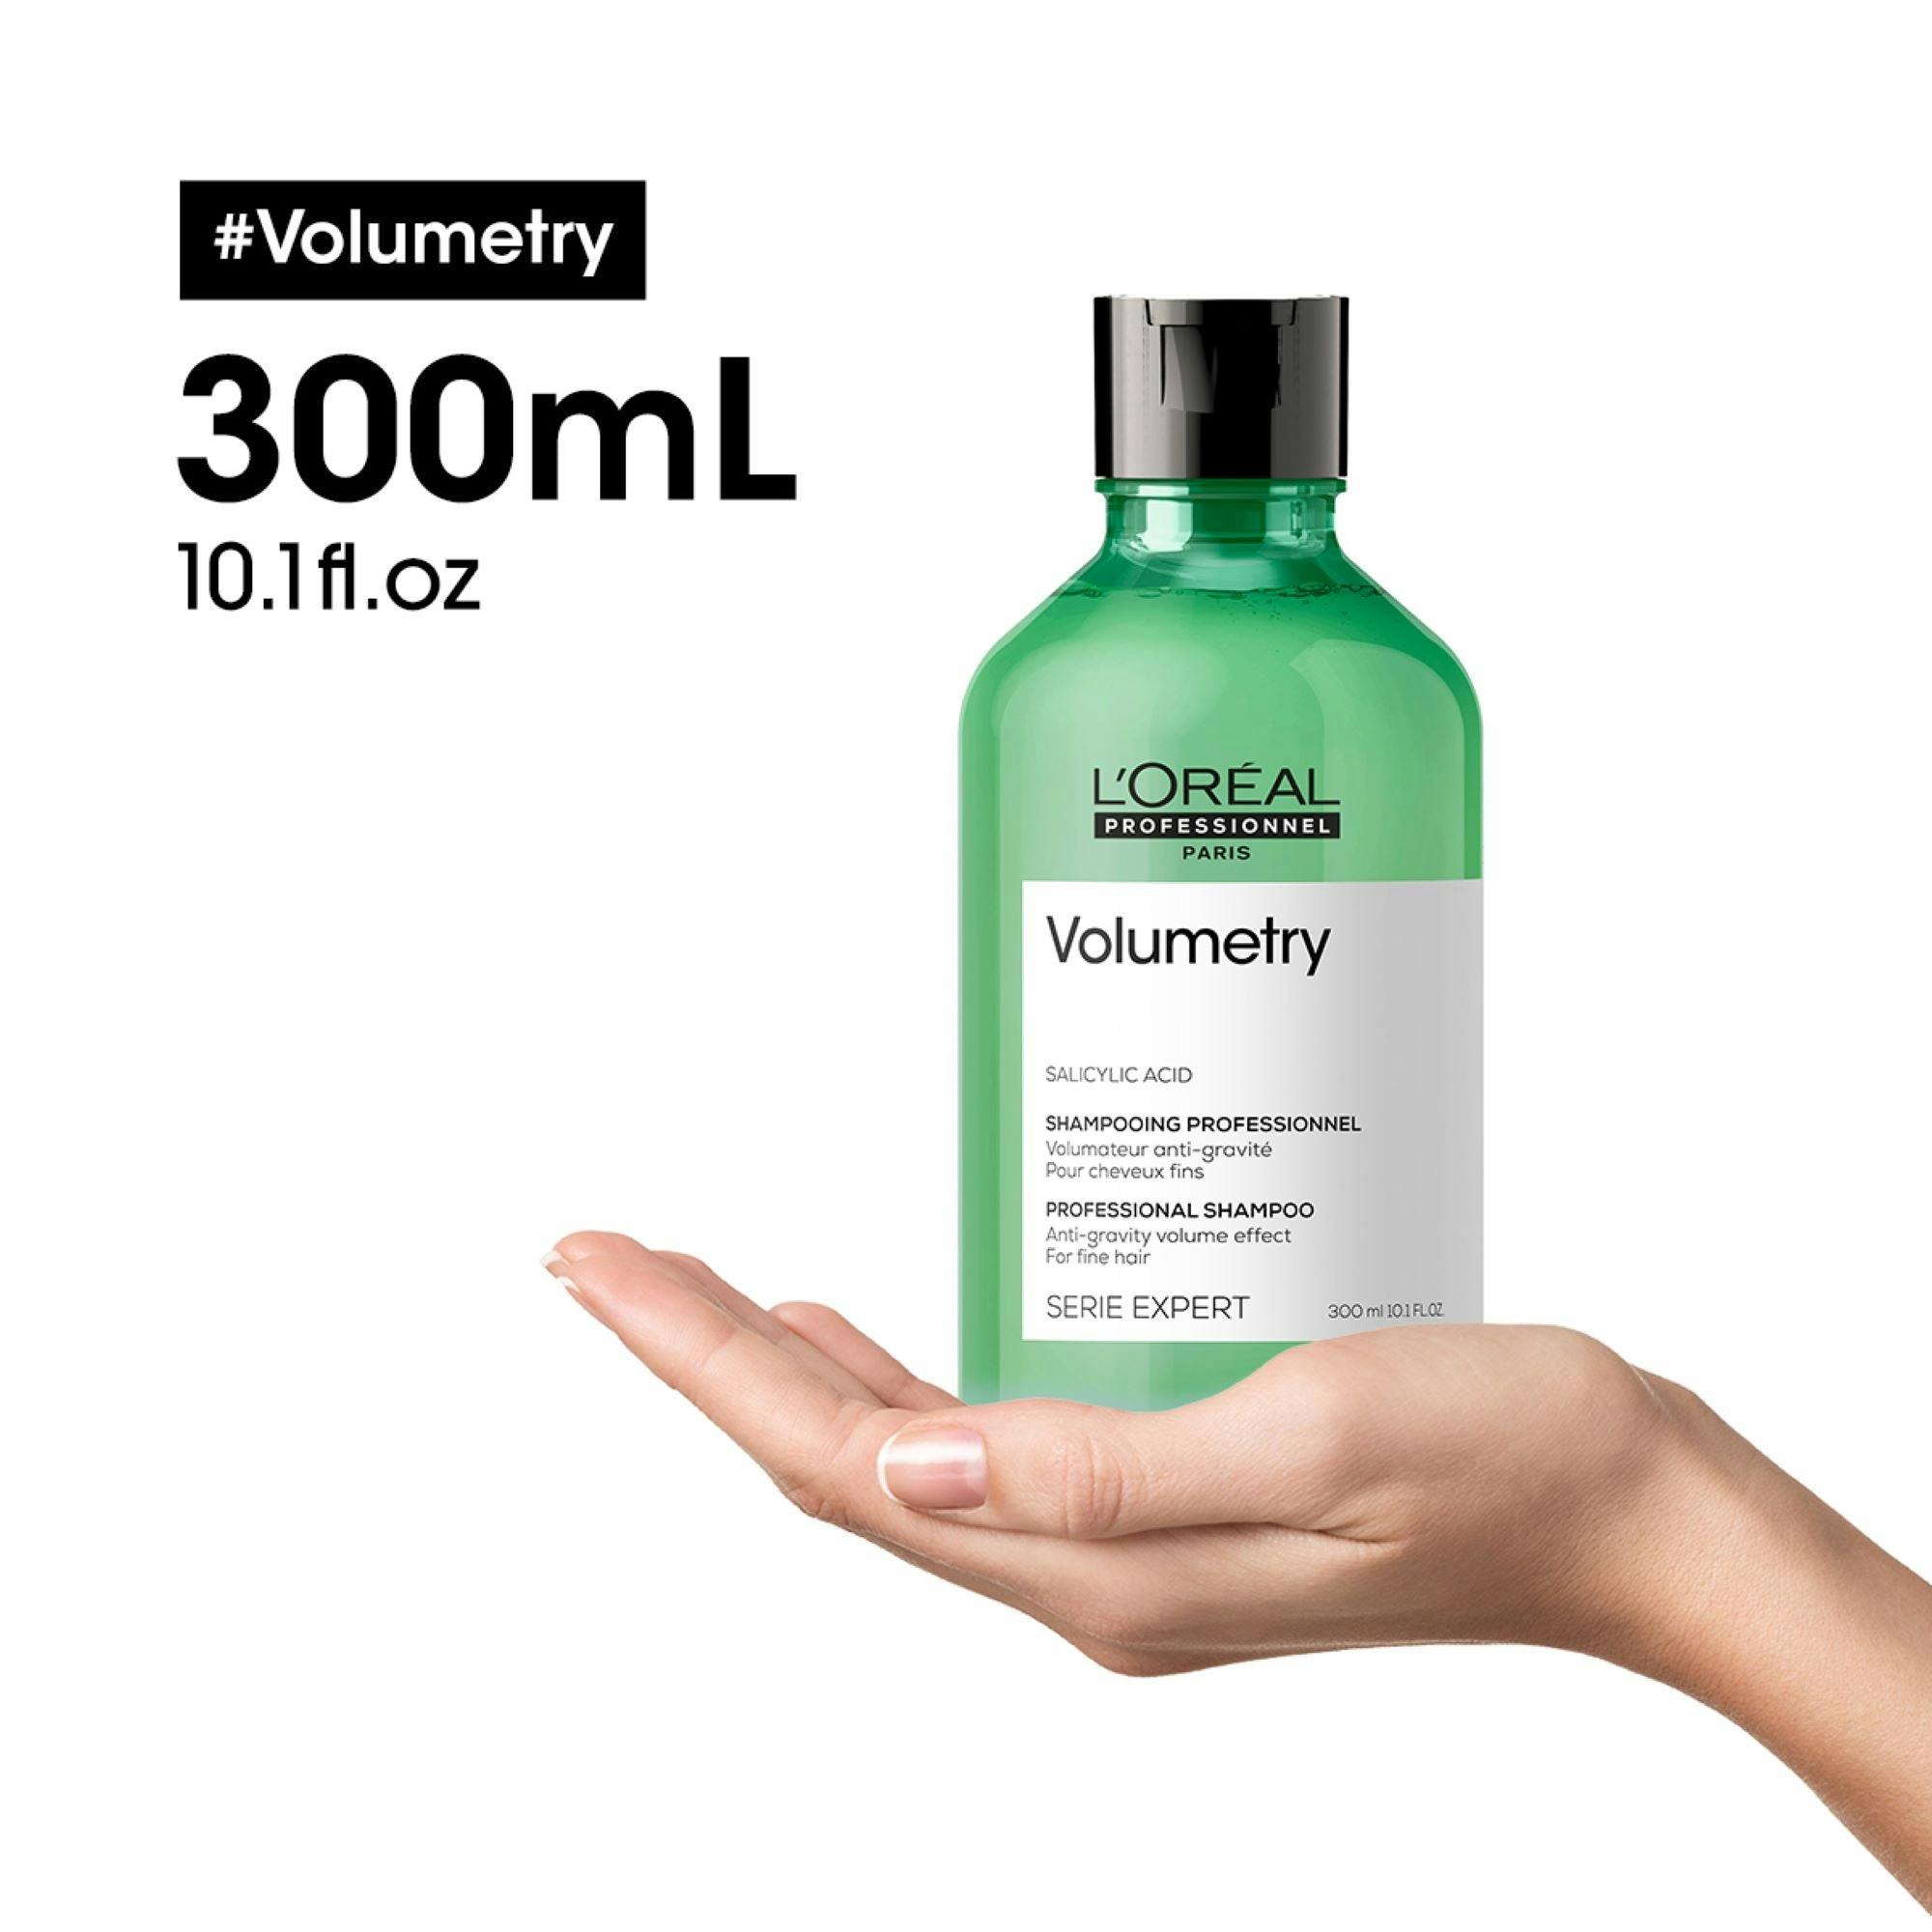 L'Oréal Professionnel Volumetry Shampoo 300ml